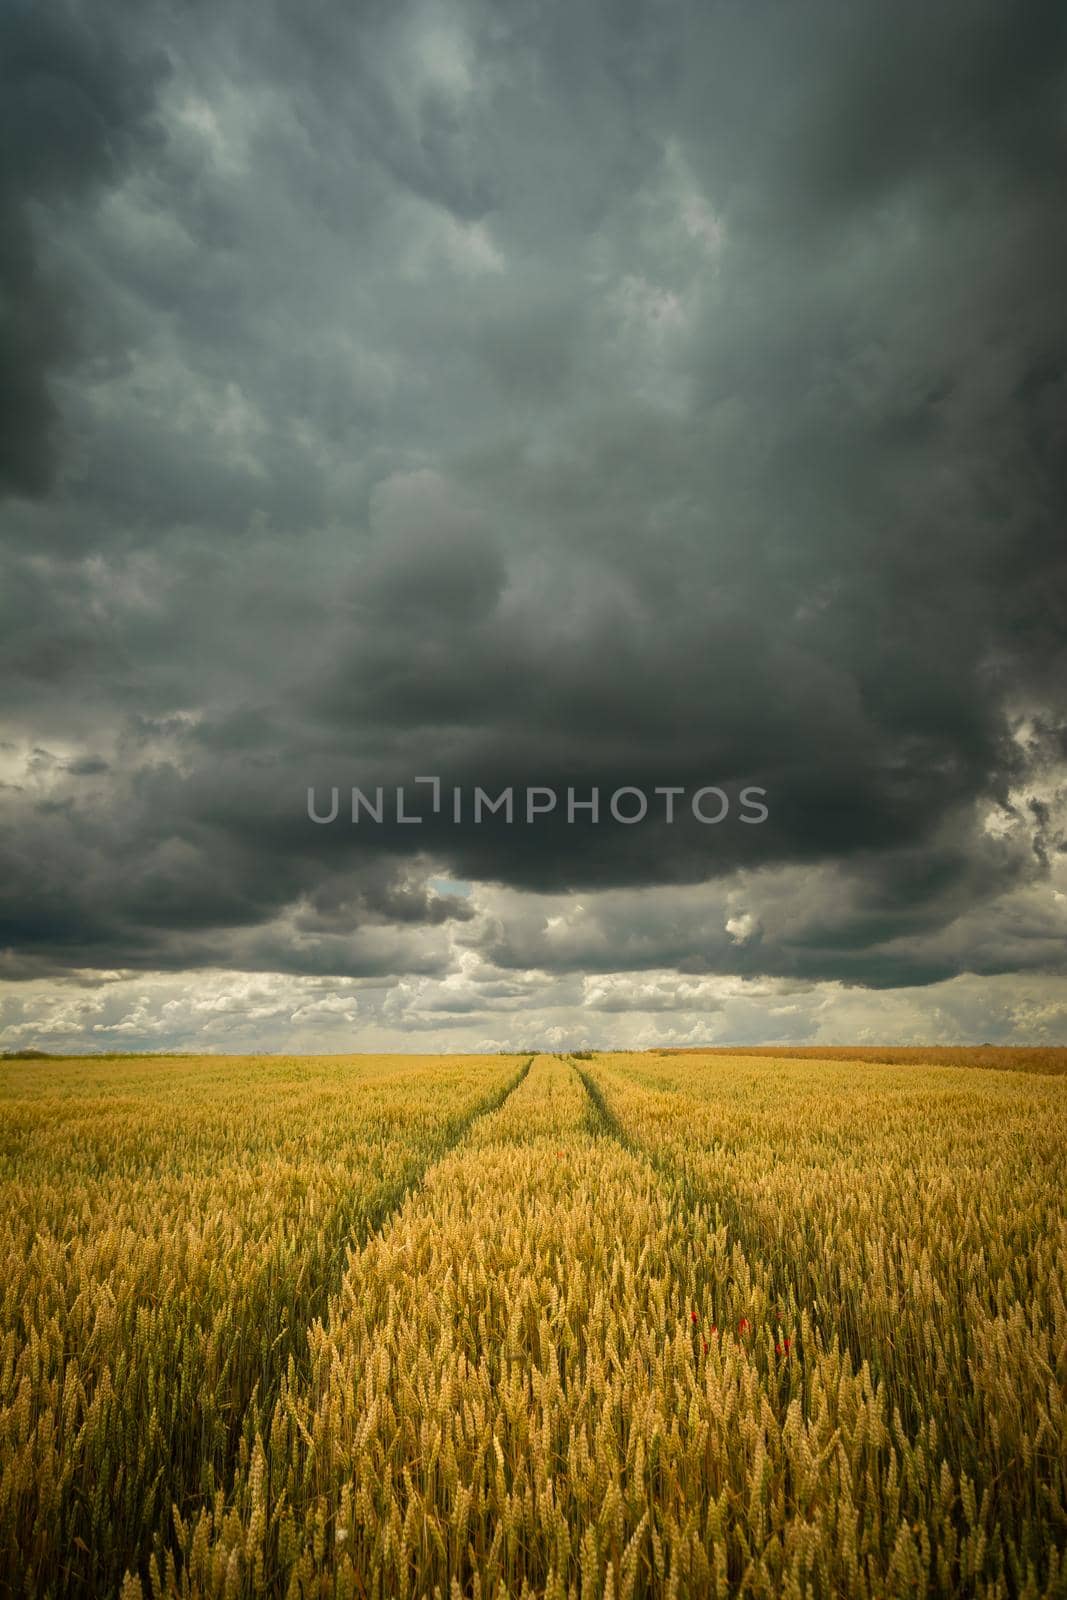 Wheel tracks in wheat and storm sky by darekb22